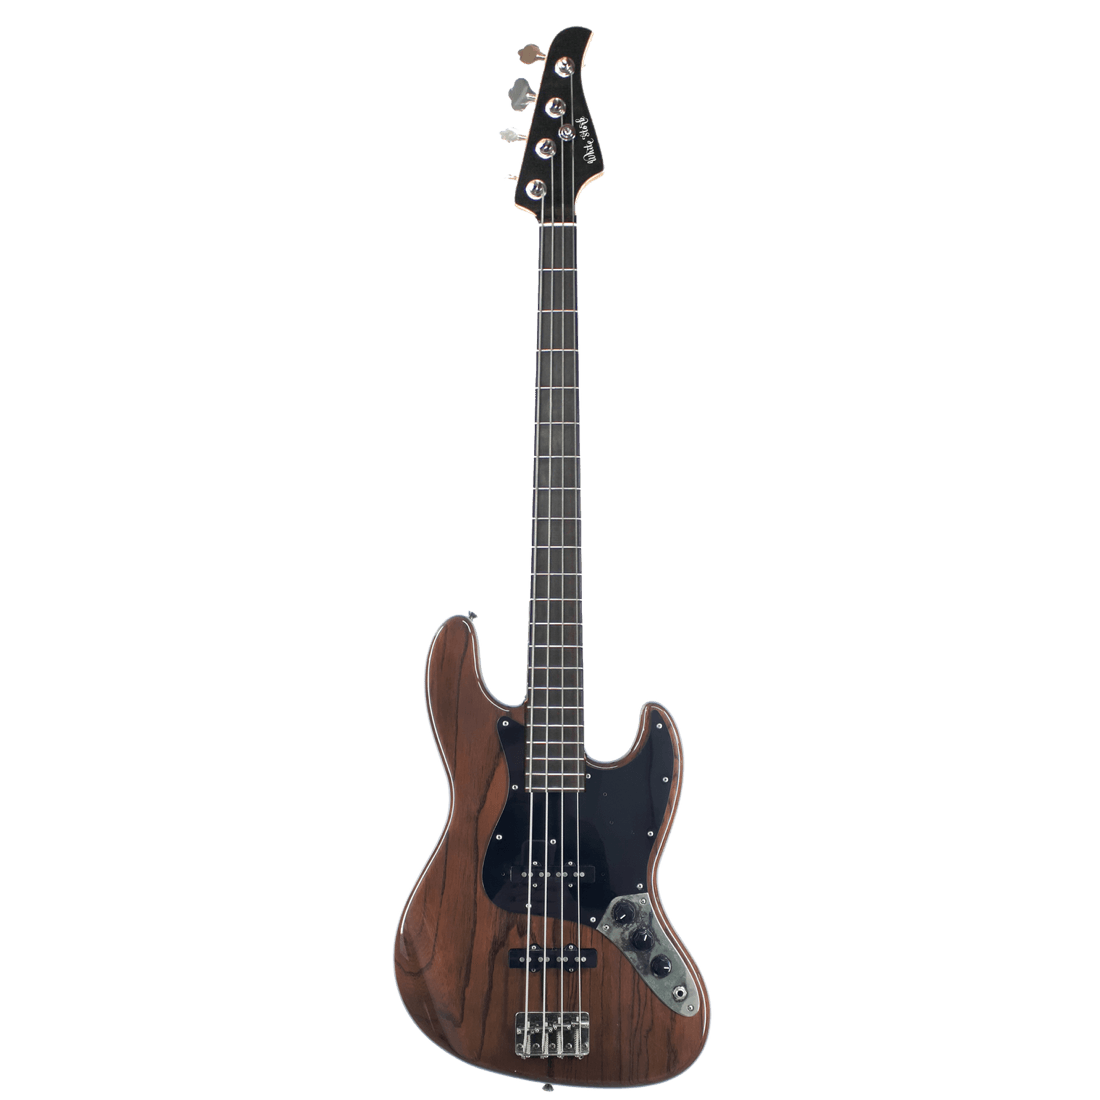 Hand Crafted Custom Made J Series Bass Guitar